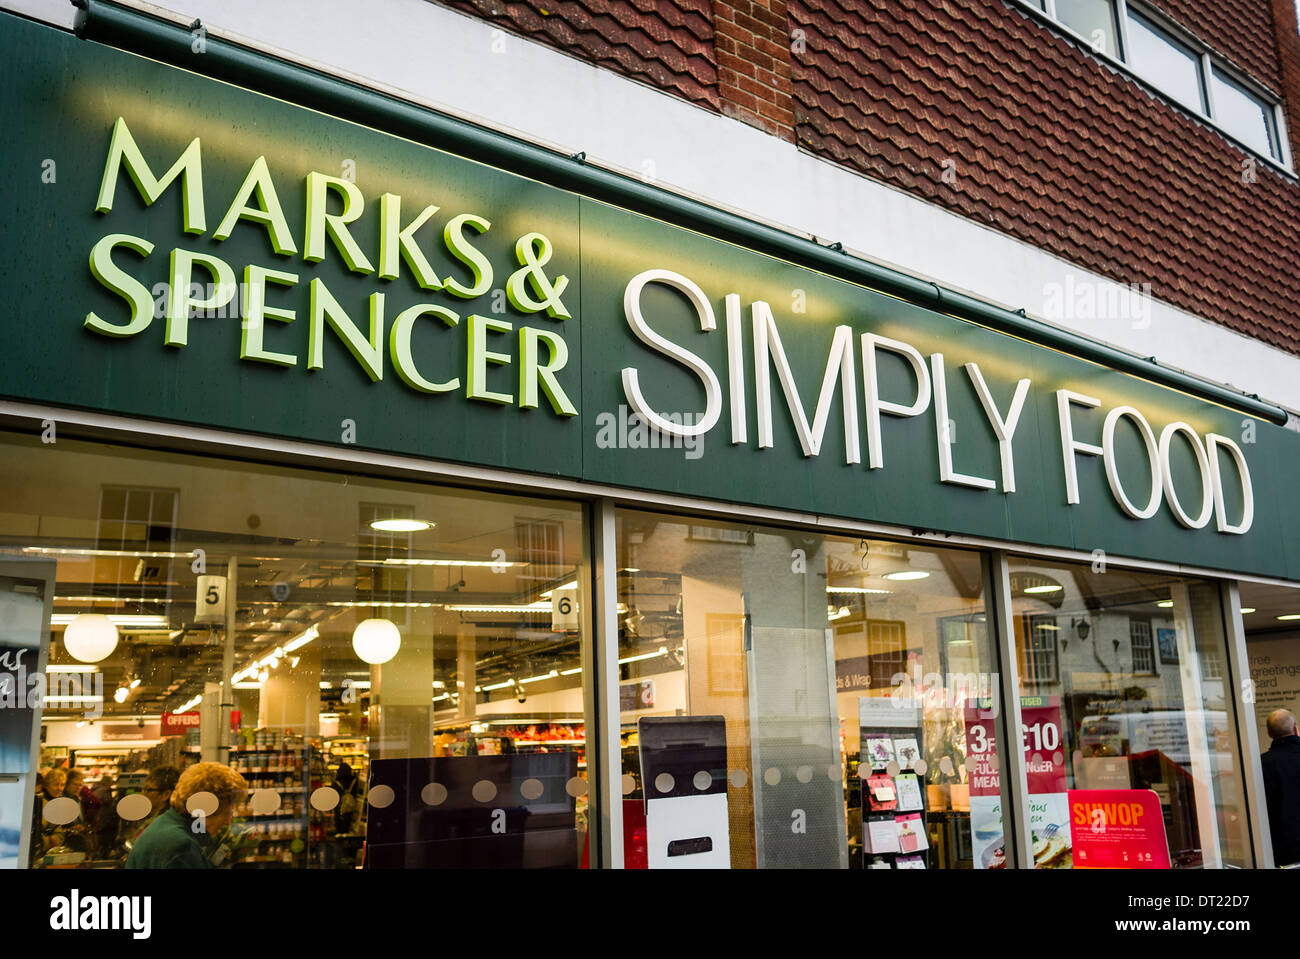 Mark & Spencer Simply Food Store in Devizes, UK Stockfoto